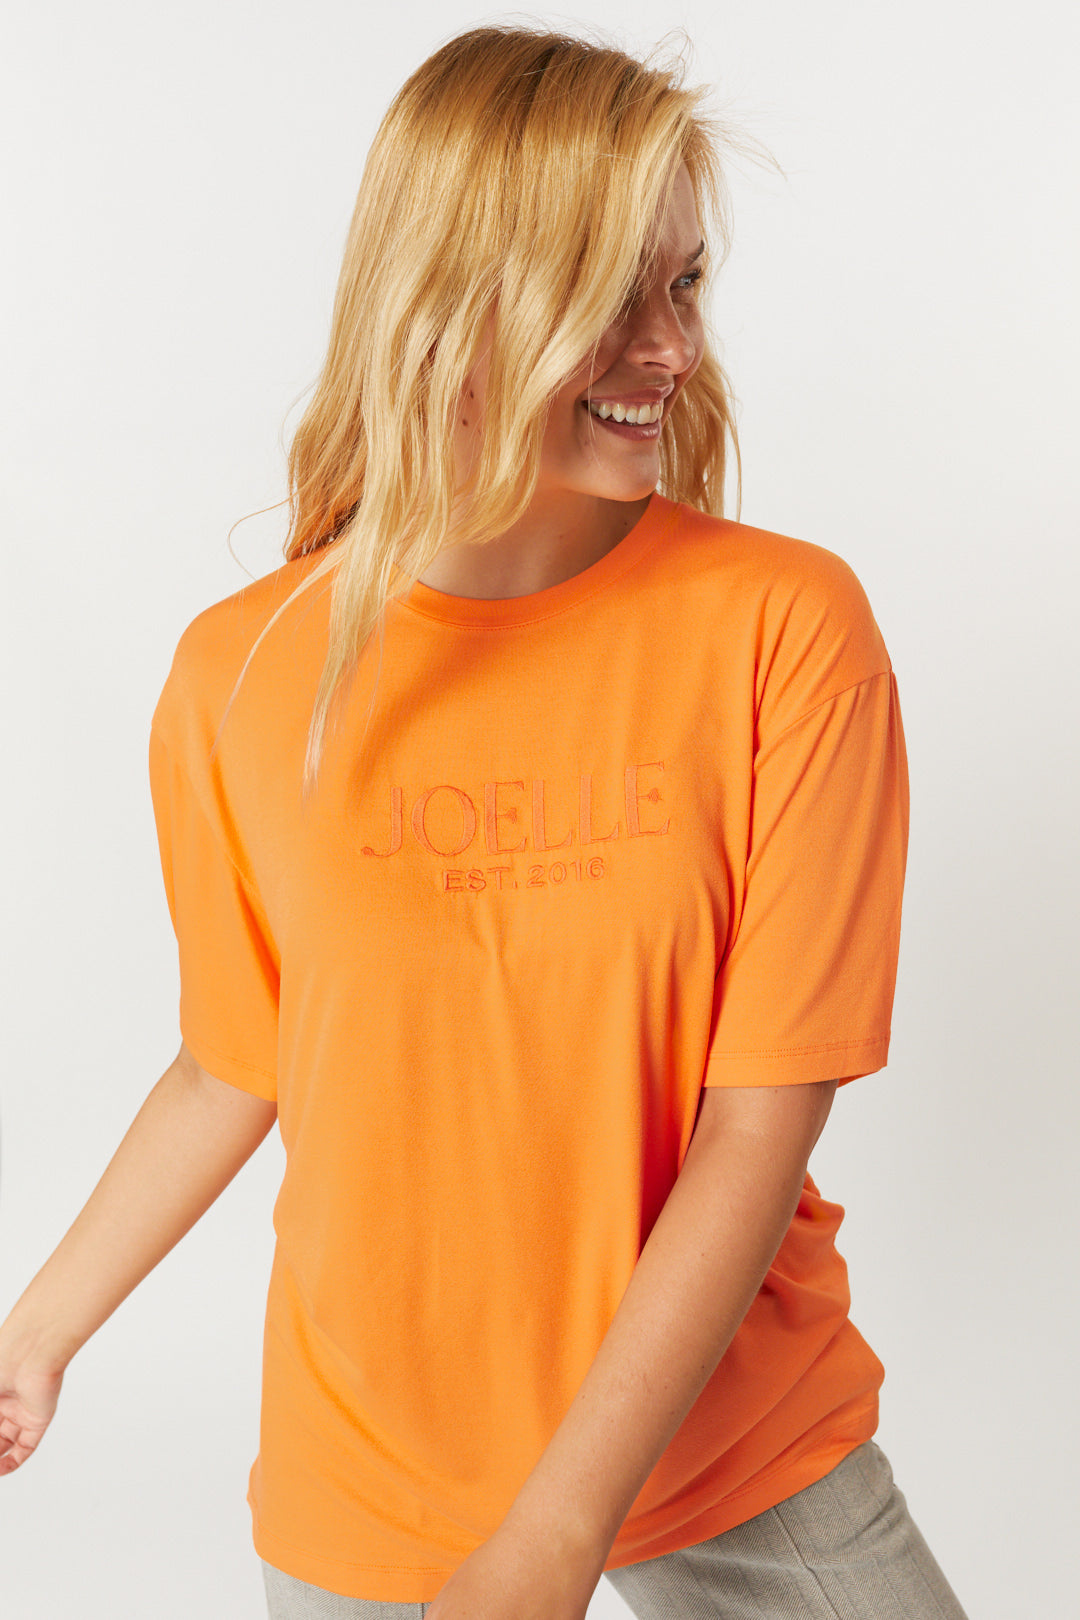 Loose orange t-shirt | Laurenzo